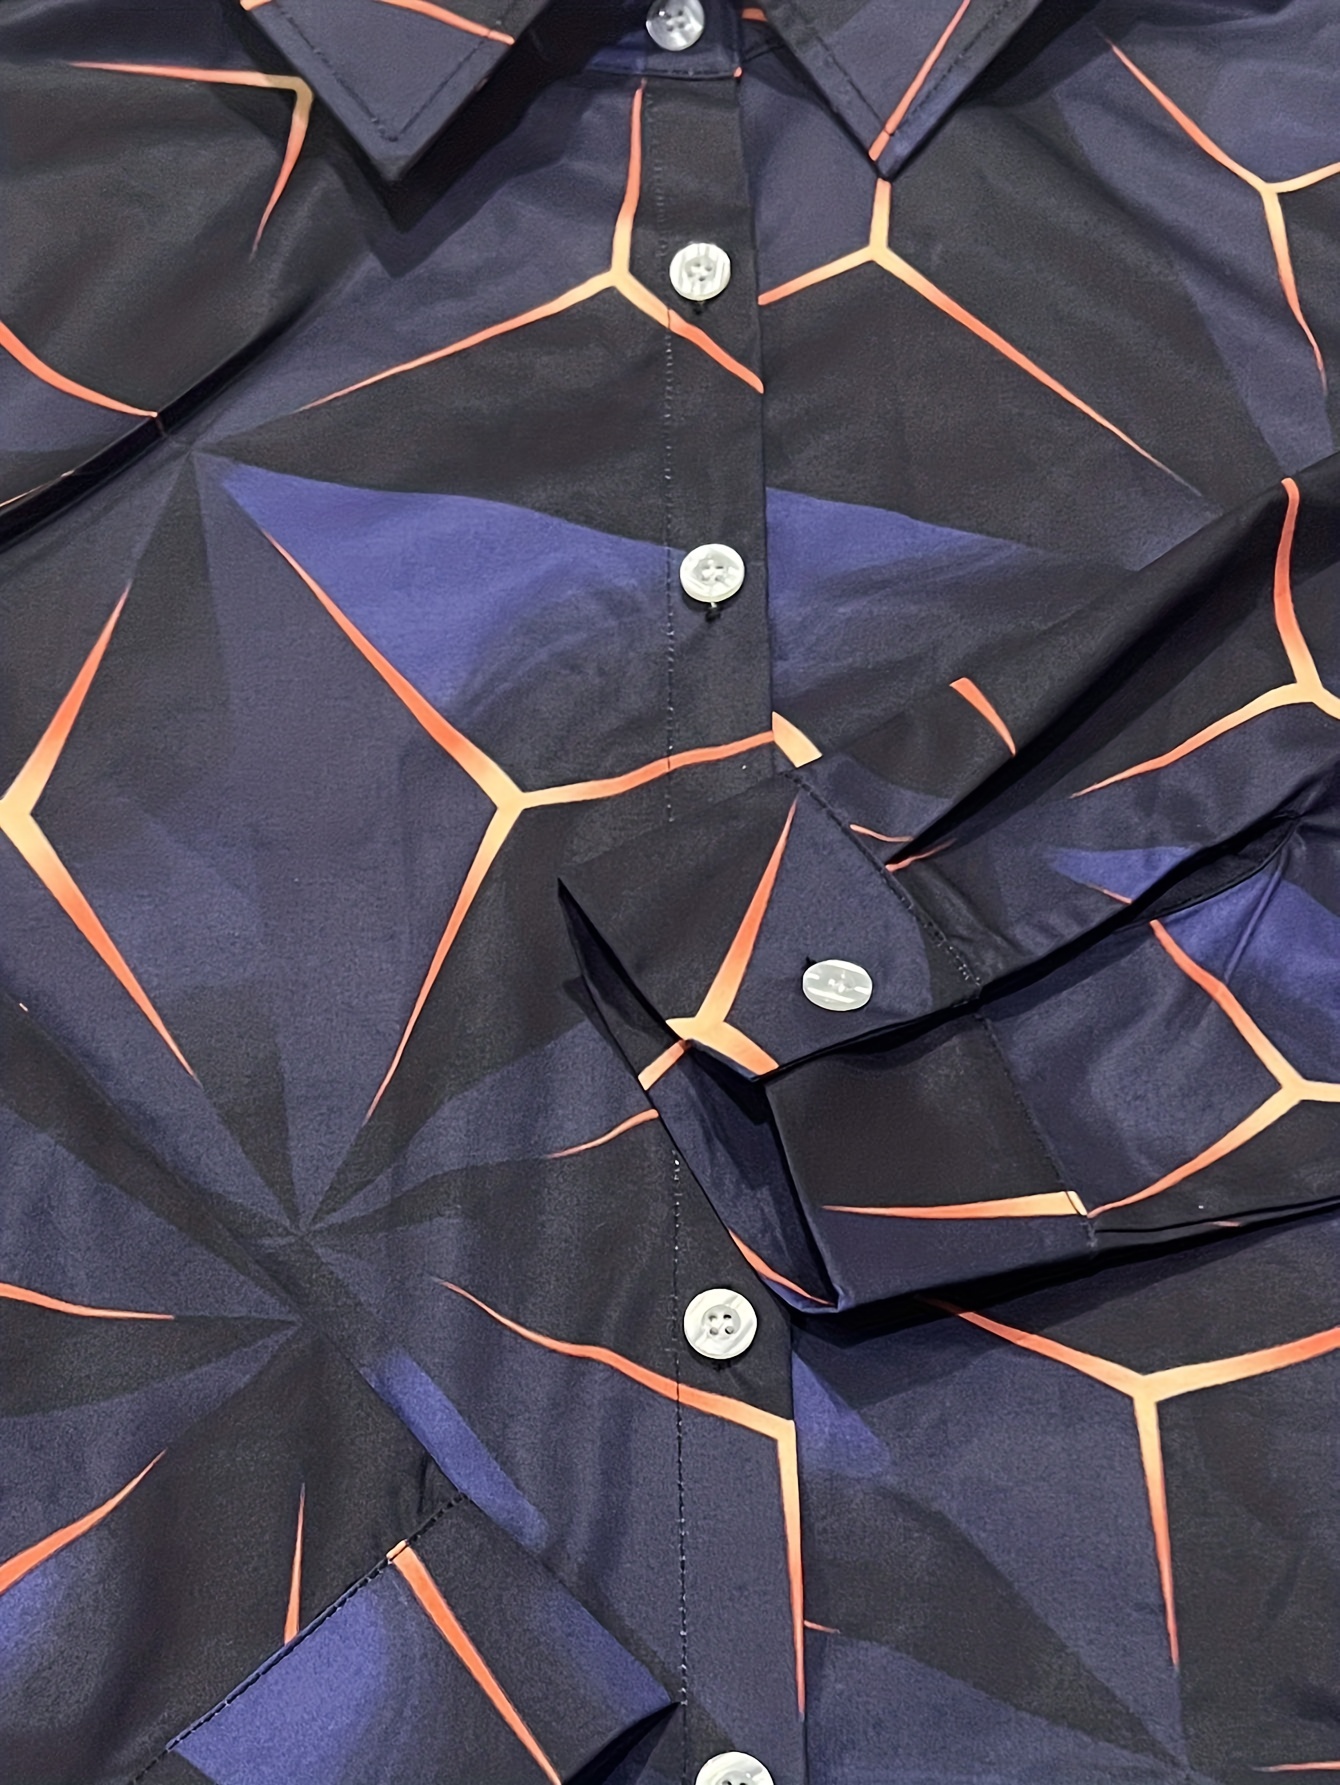 Las mejores ofertas en Louis Vuitton camisas de manga larga para